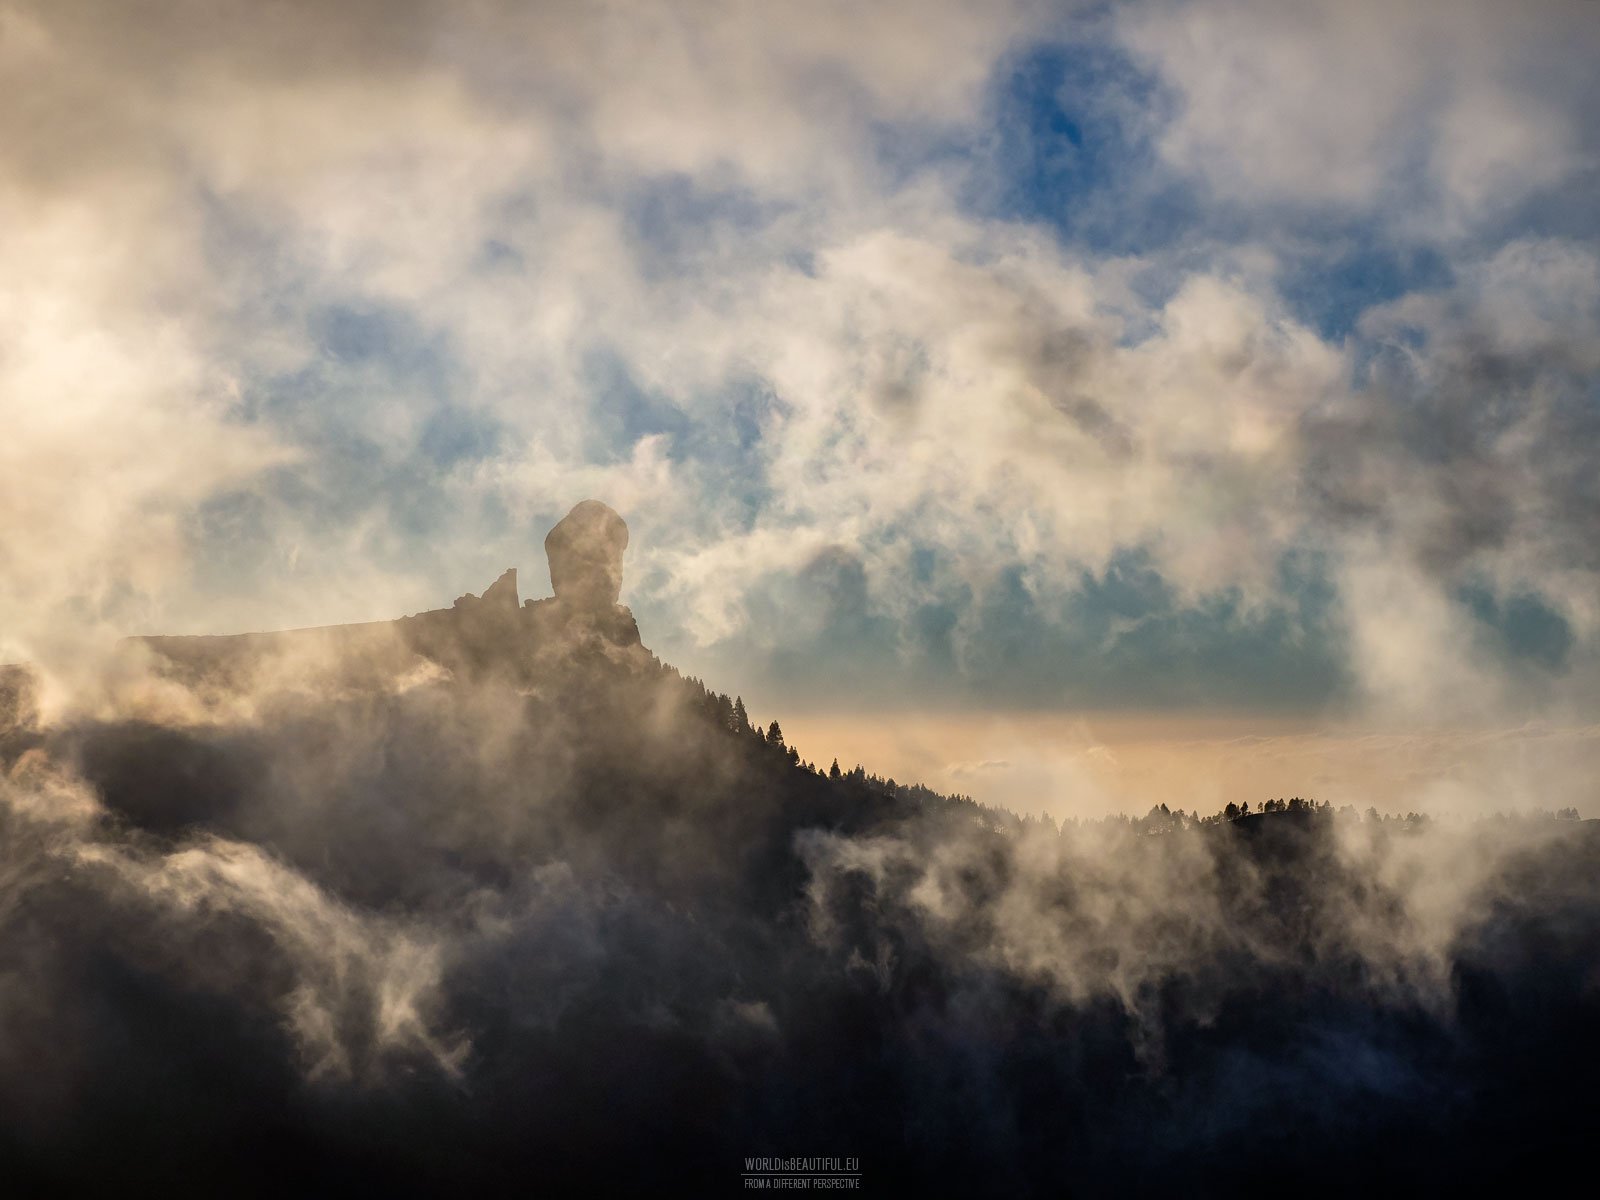 Roque Nublo - Rock of the Clouds